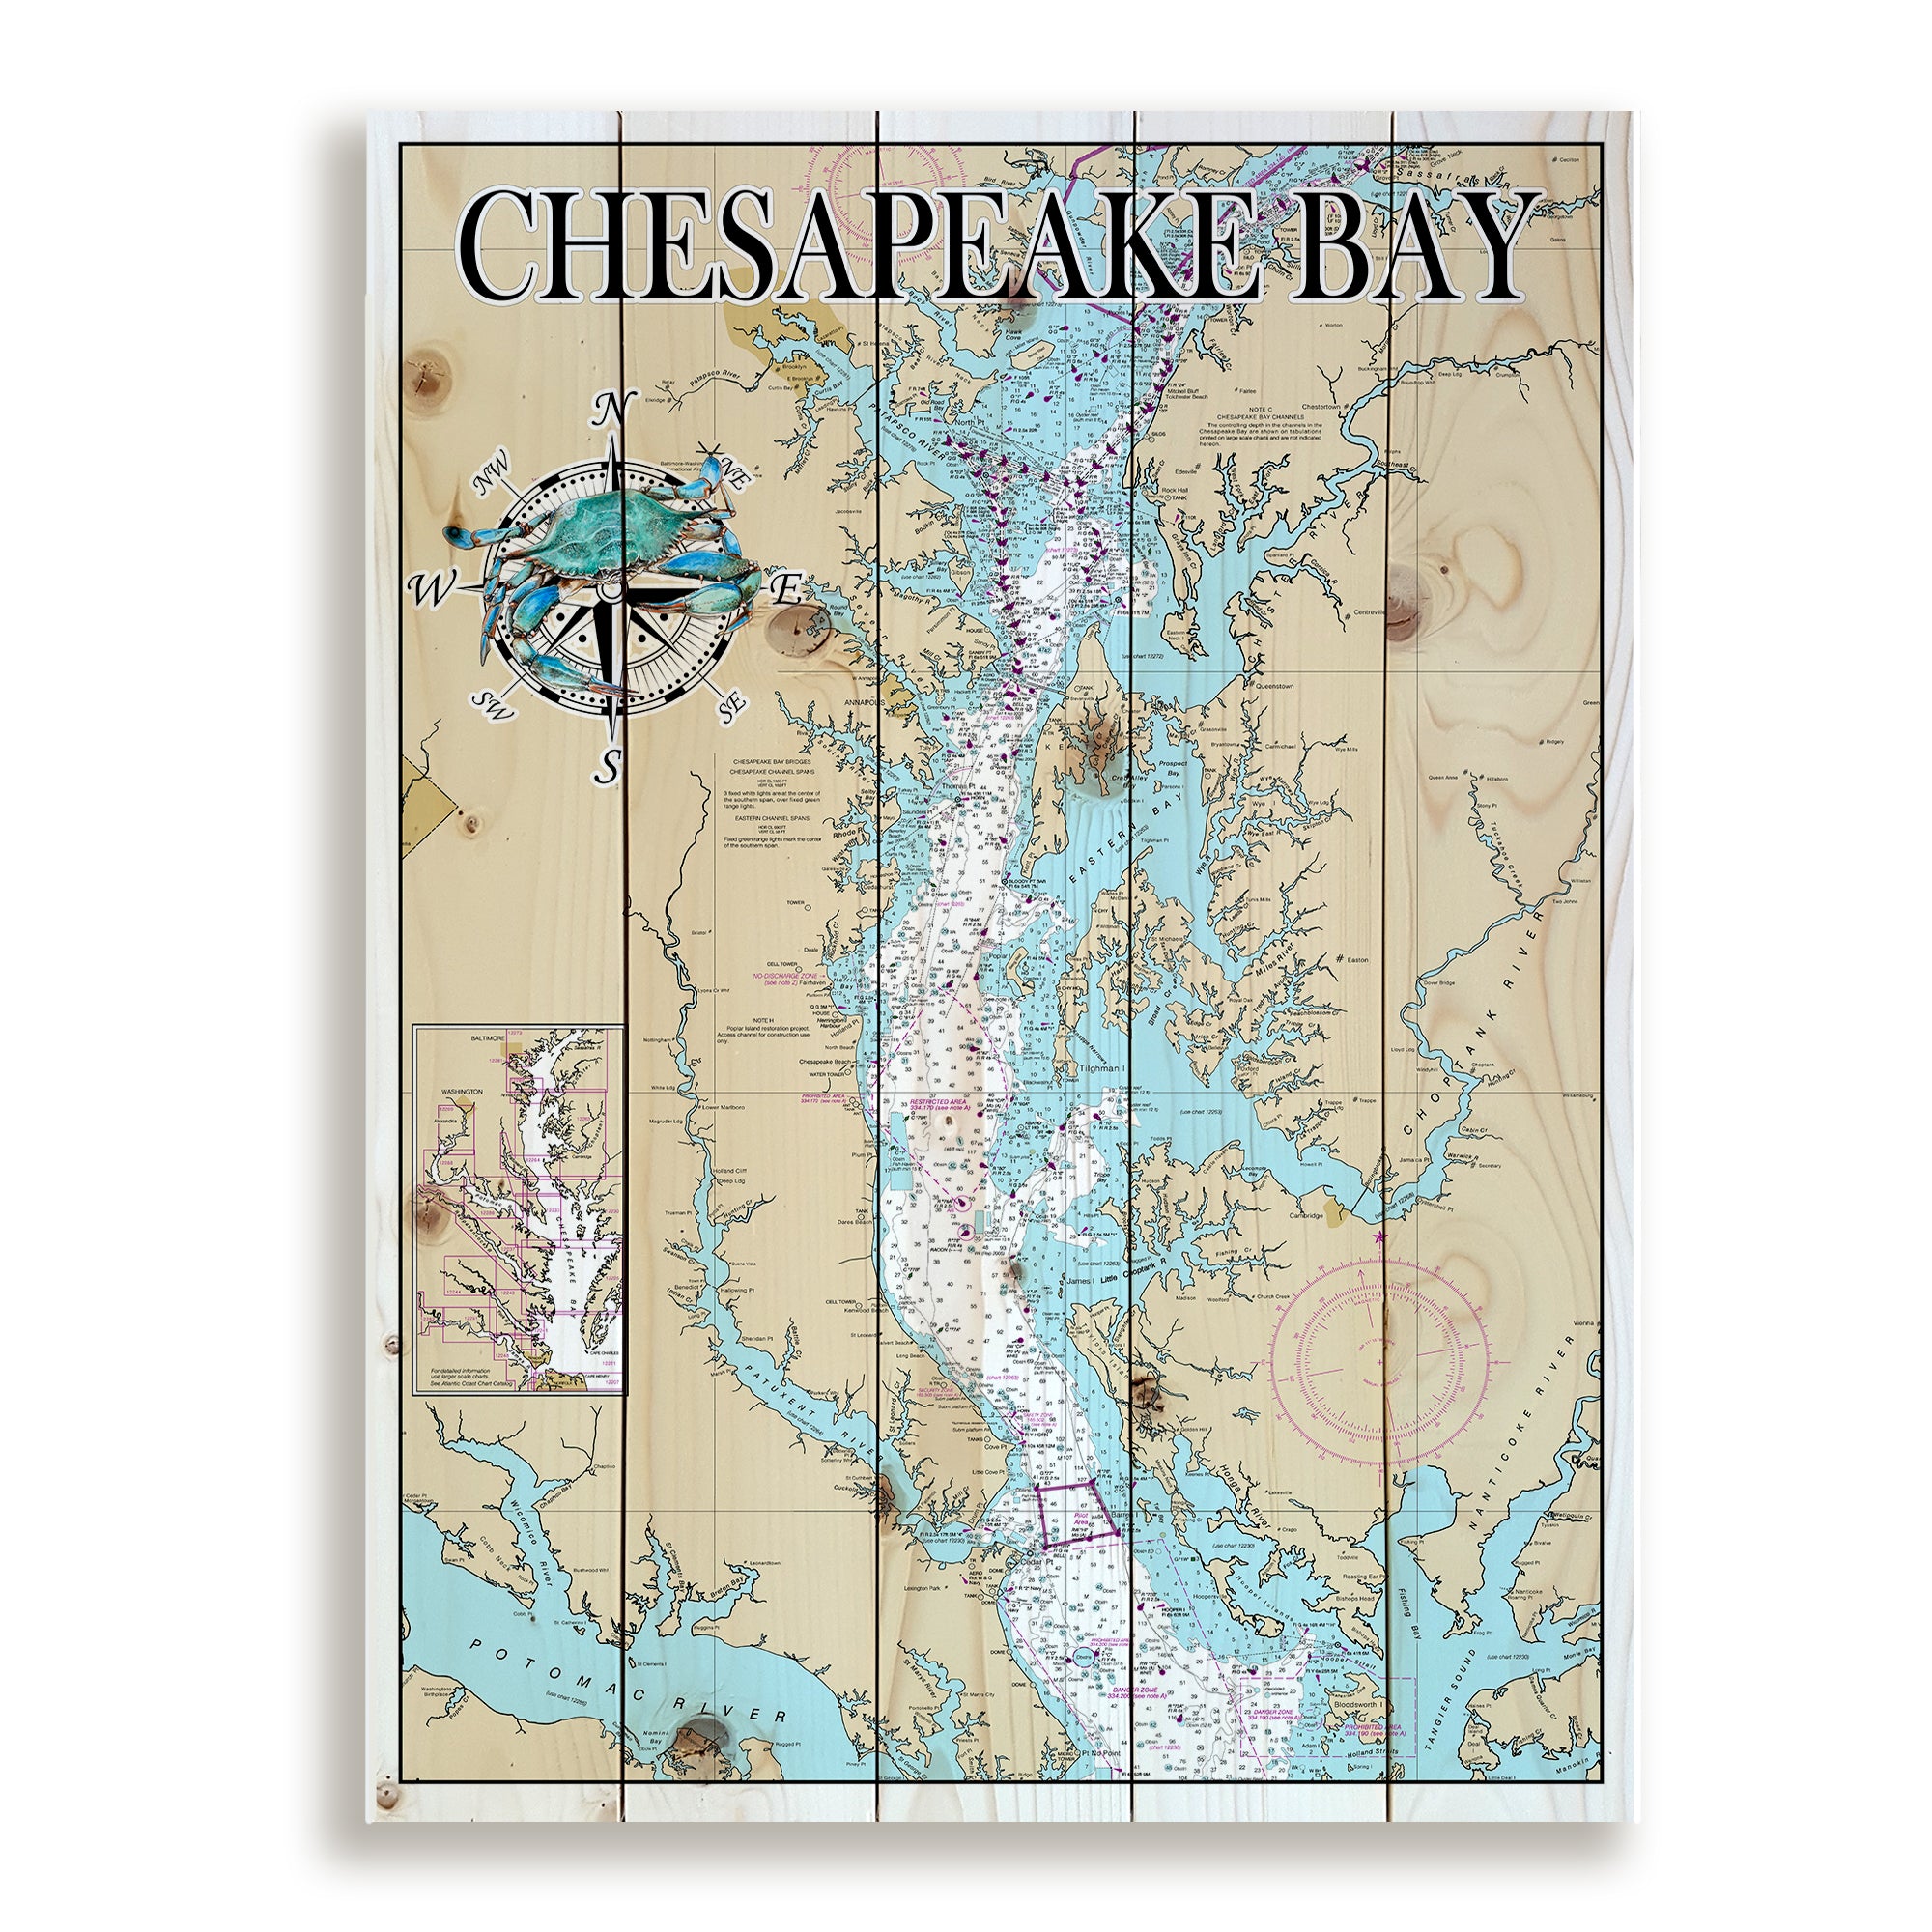 Chesapeake Bay, NOAA Pallet Map